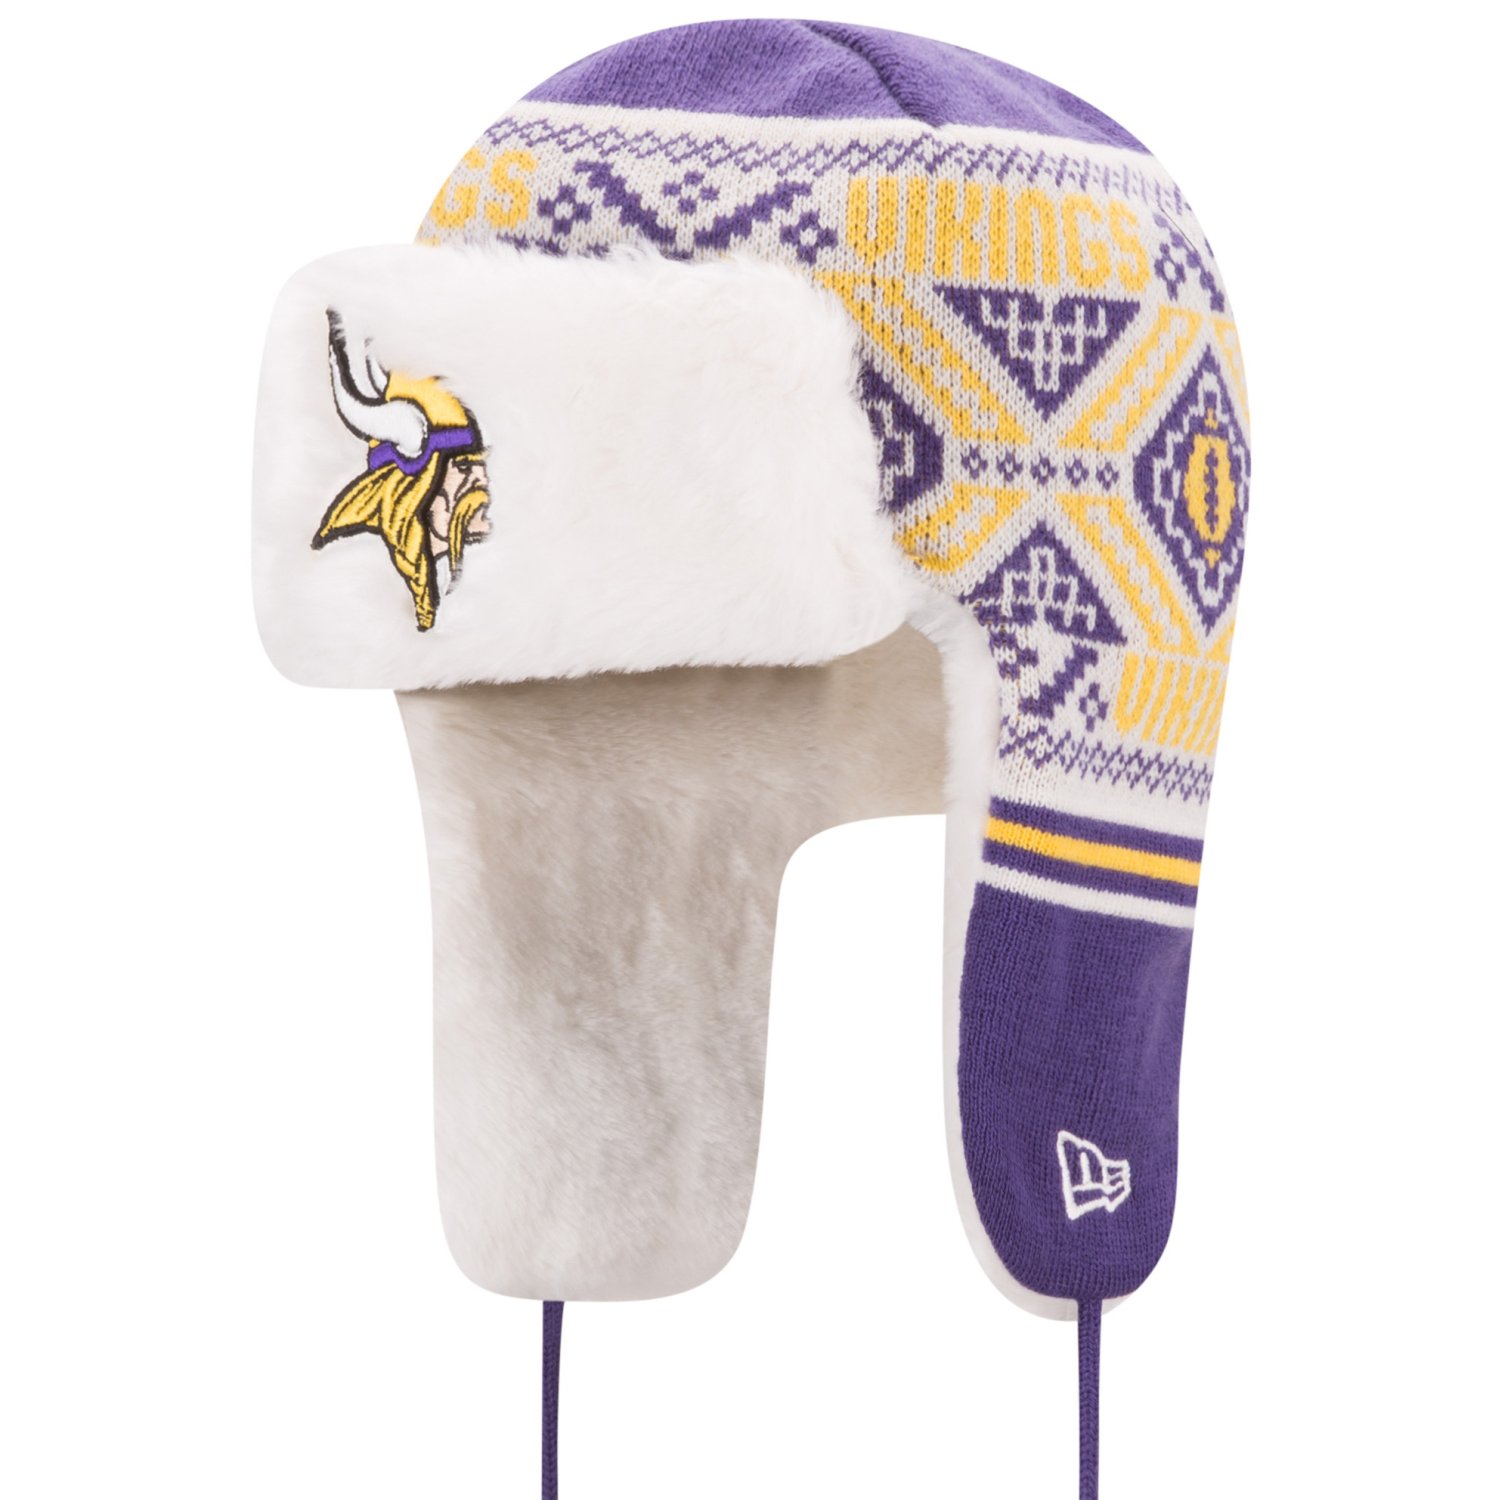 New Era Winter Hat FESTIVE TRAPPER - Minnesota Vikings, Men's beanies, Beanies